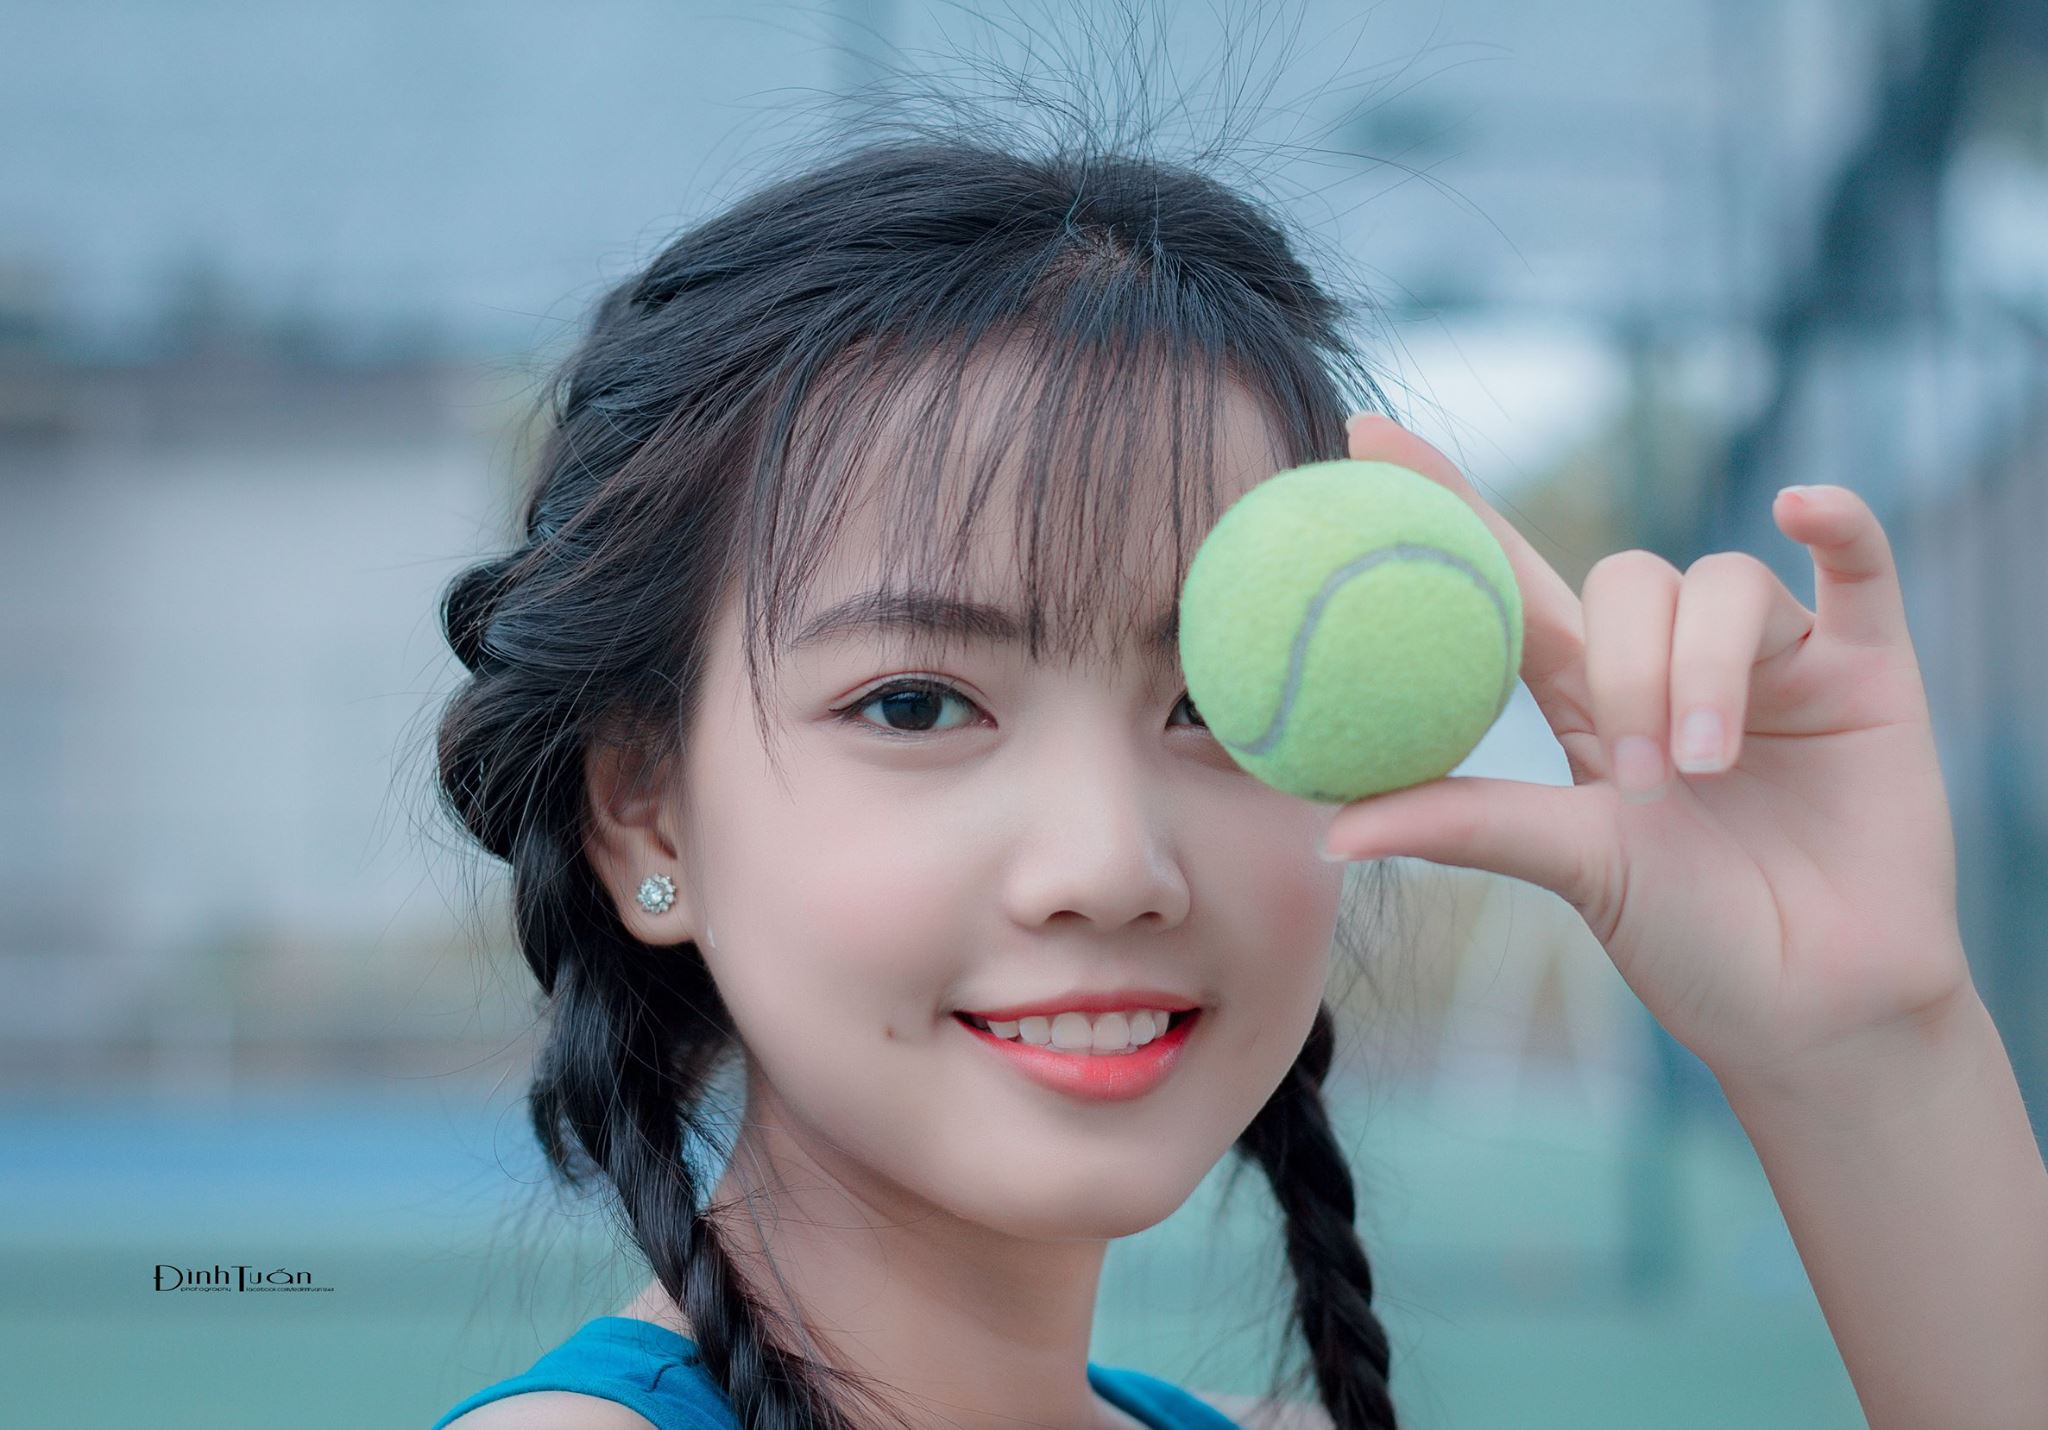 LDTPhotos | Le Dinh Tuan Tennis-2-11 LDTPhotos | Le Dinh Tuan - @ledinhtuan  